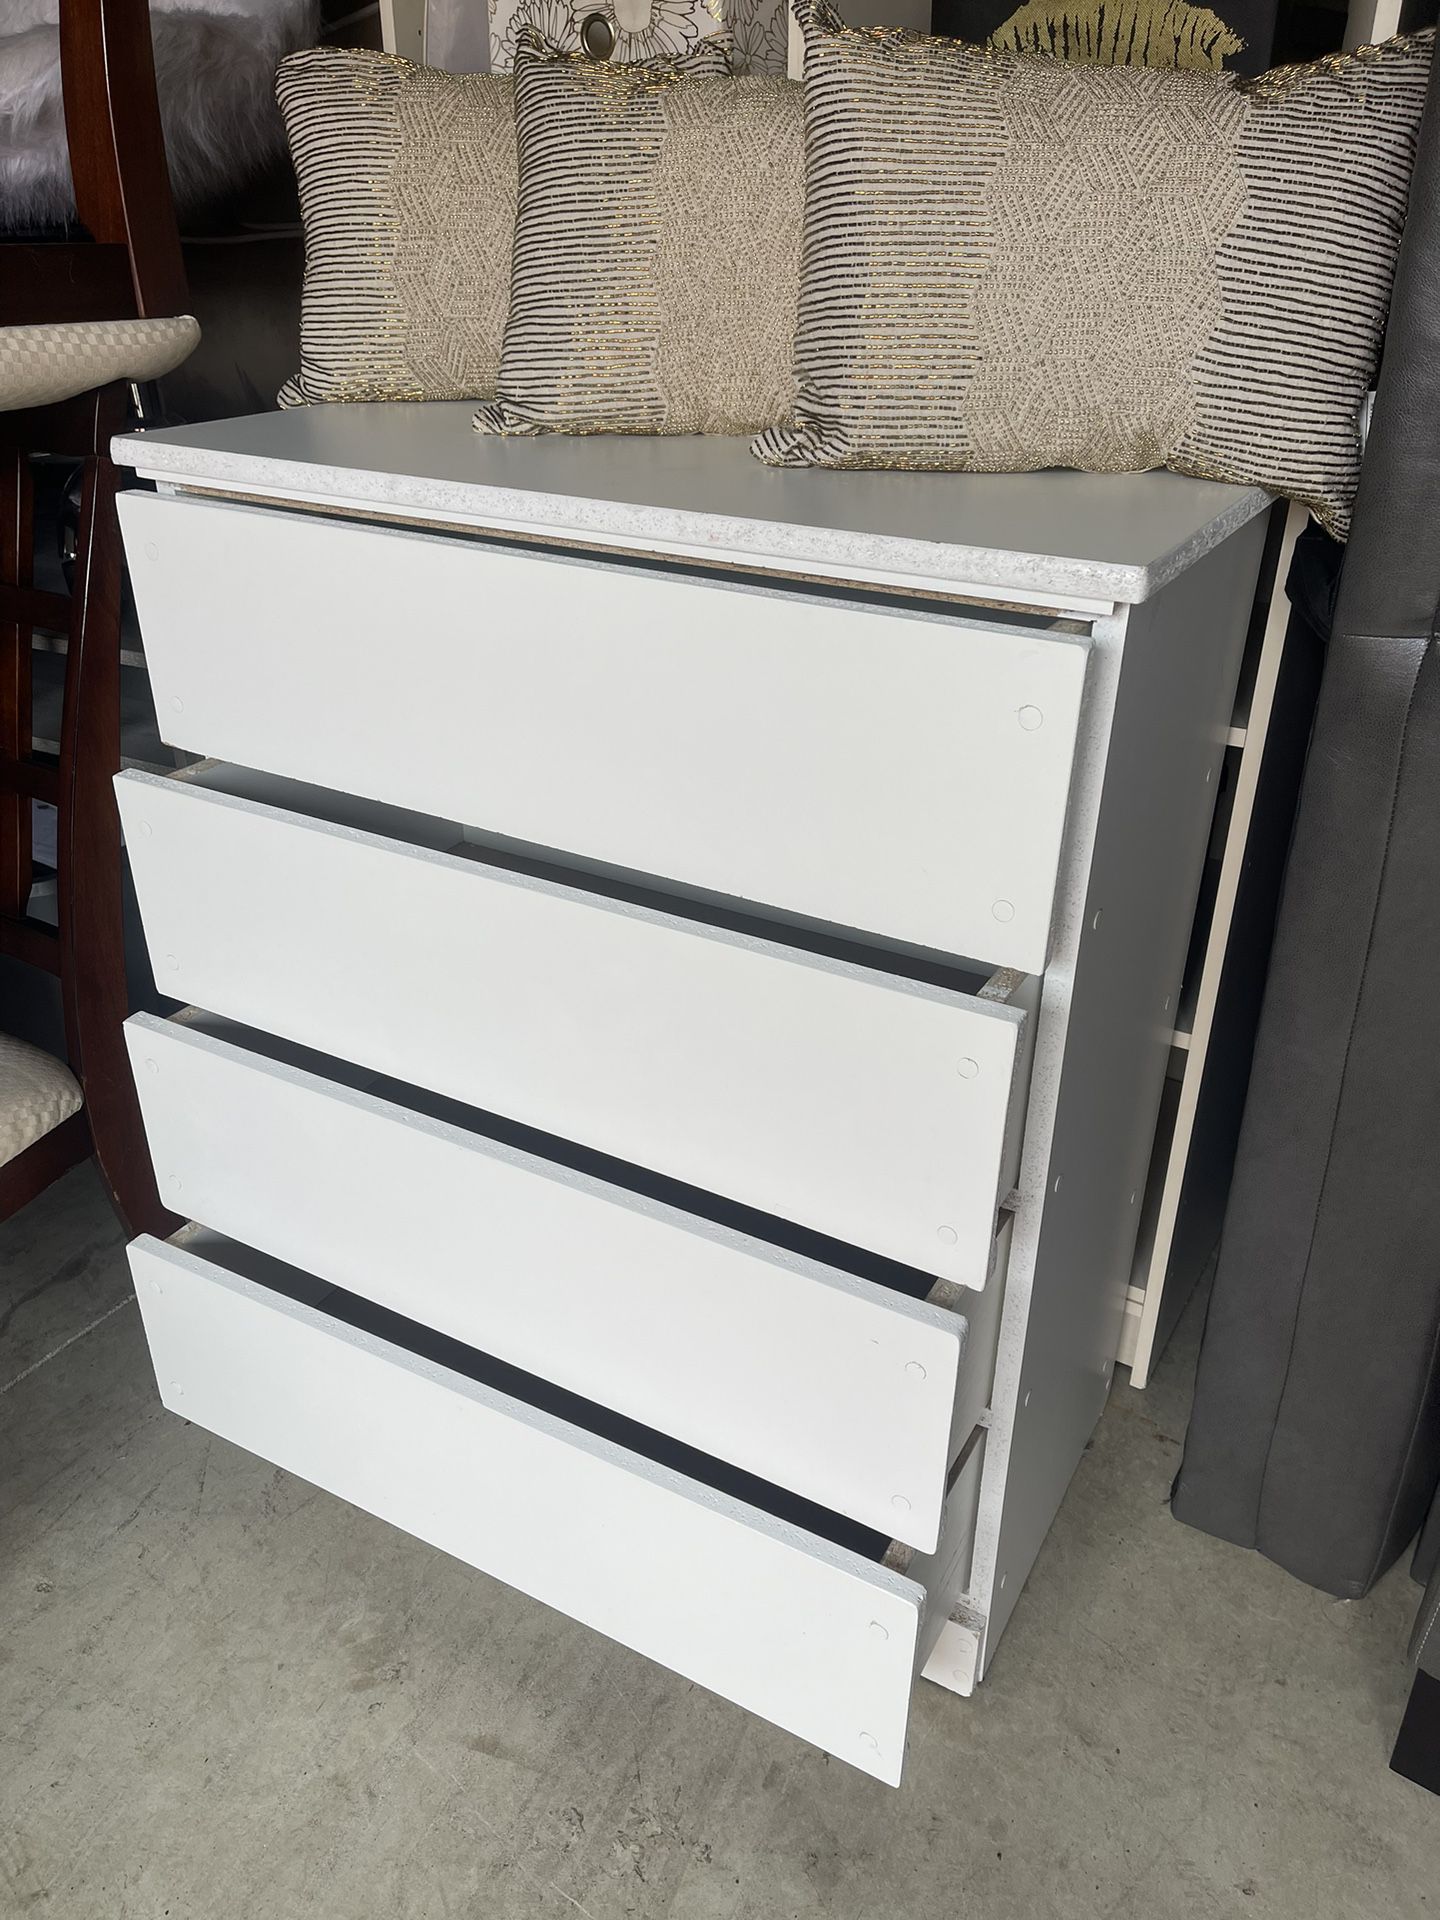 Small White Dresser